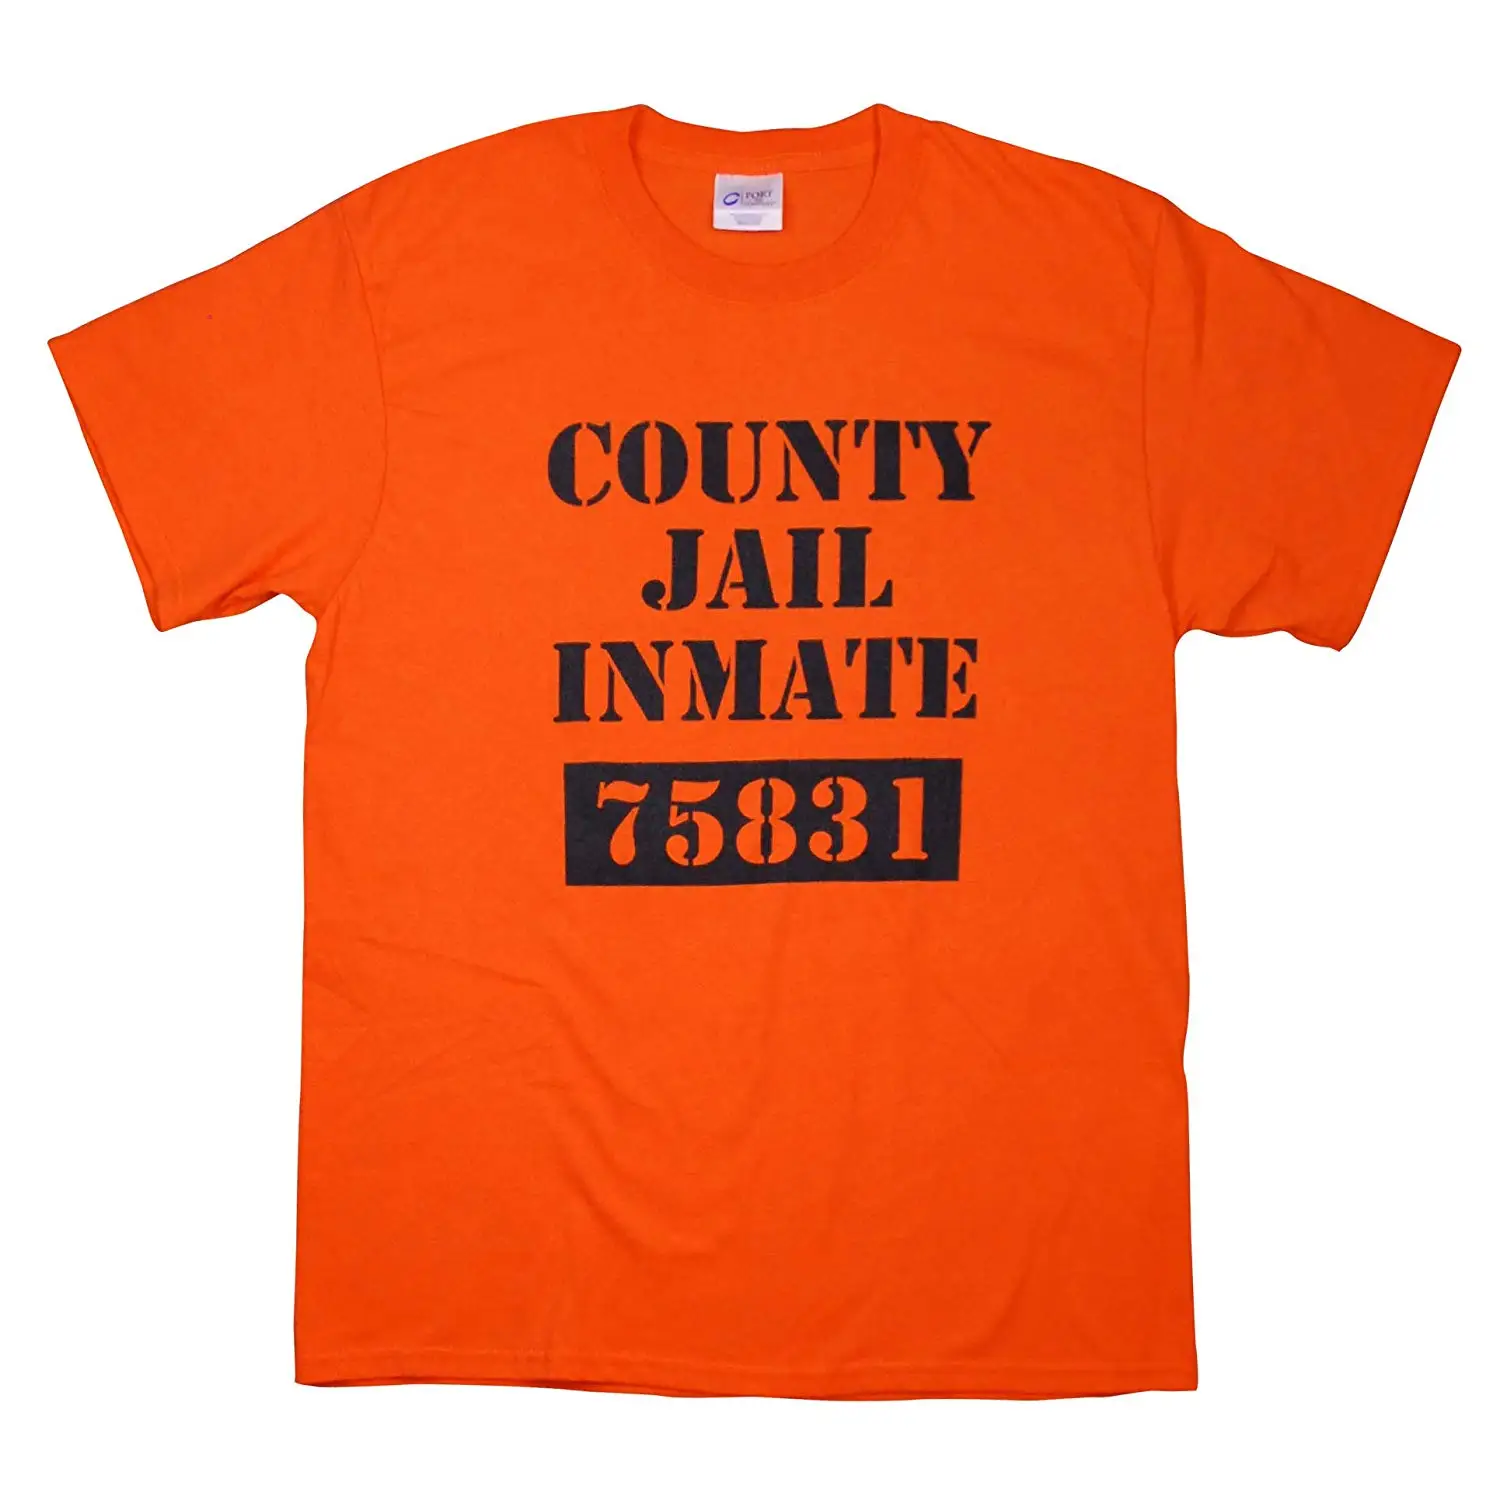 Prisoner Jumpsuit Ann Arbor T-shirt Co Orange Prison Inmate Halloween Costume Unisex Jail Criminal